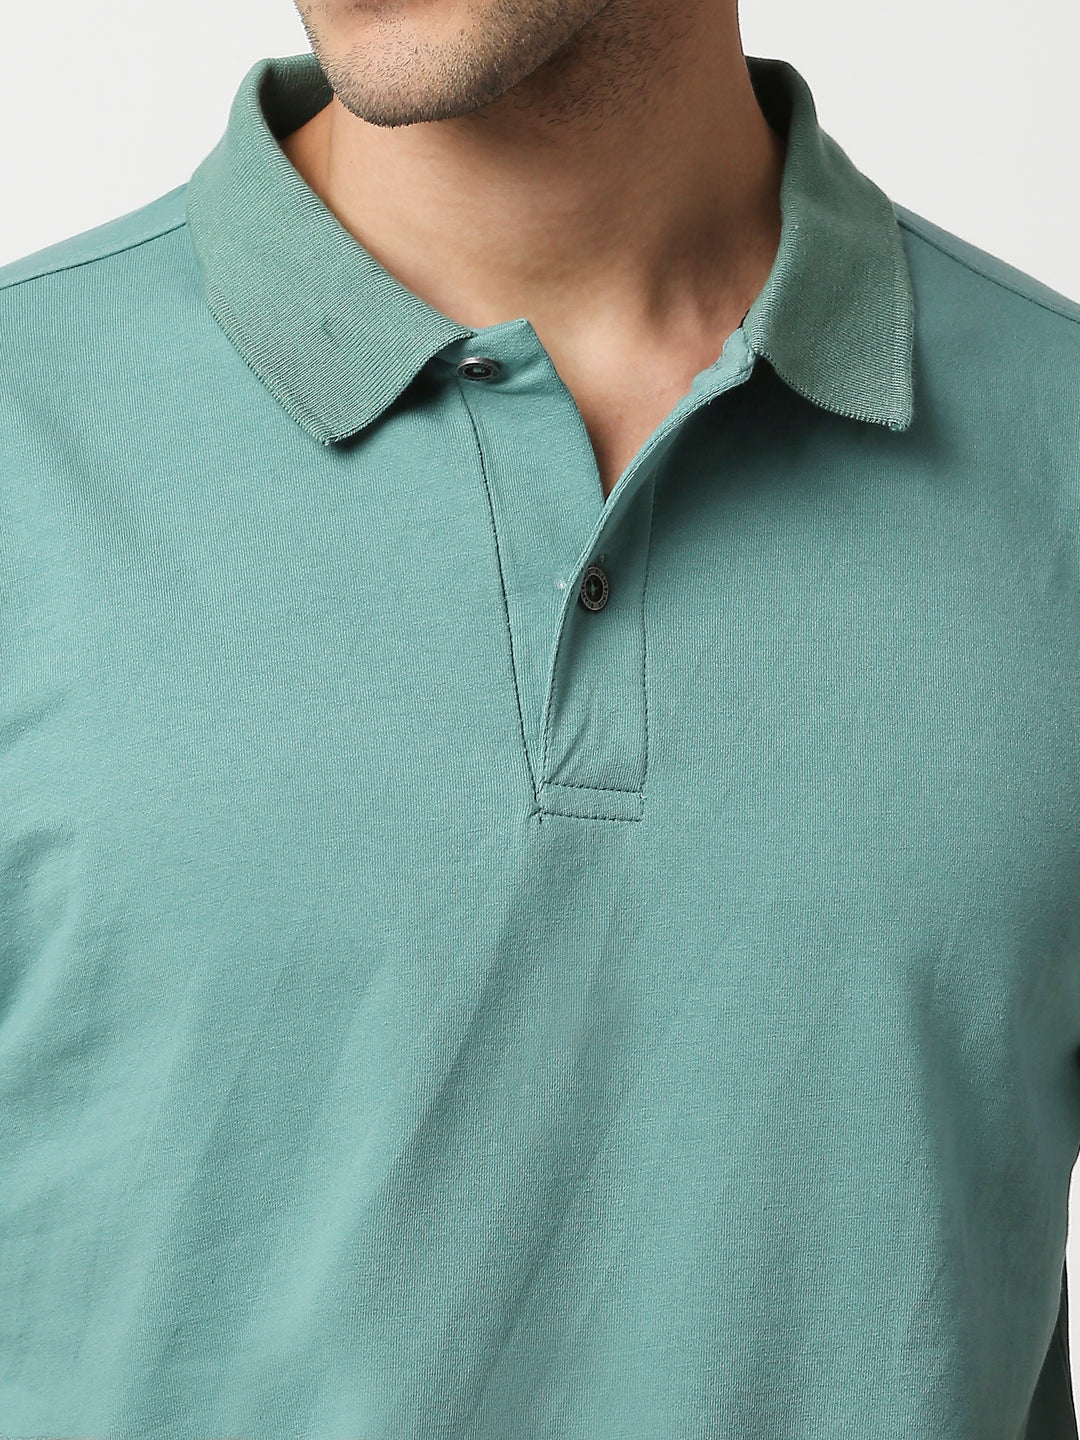 Buy Blamblack Men's Polo Plain Green Color T shirt